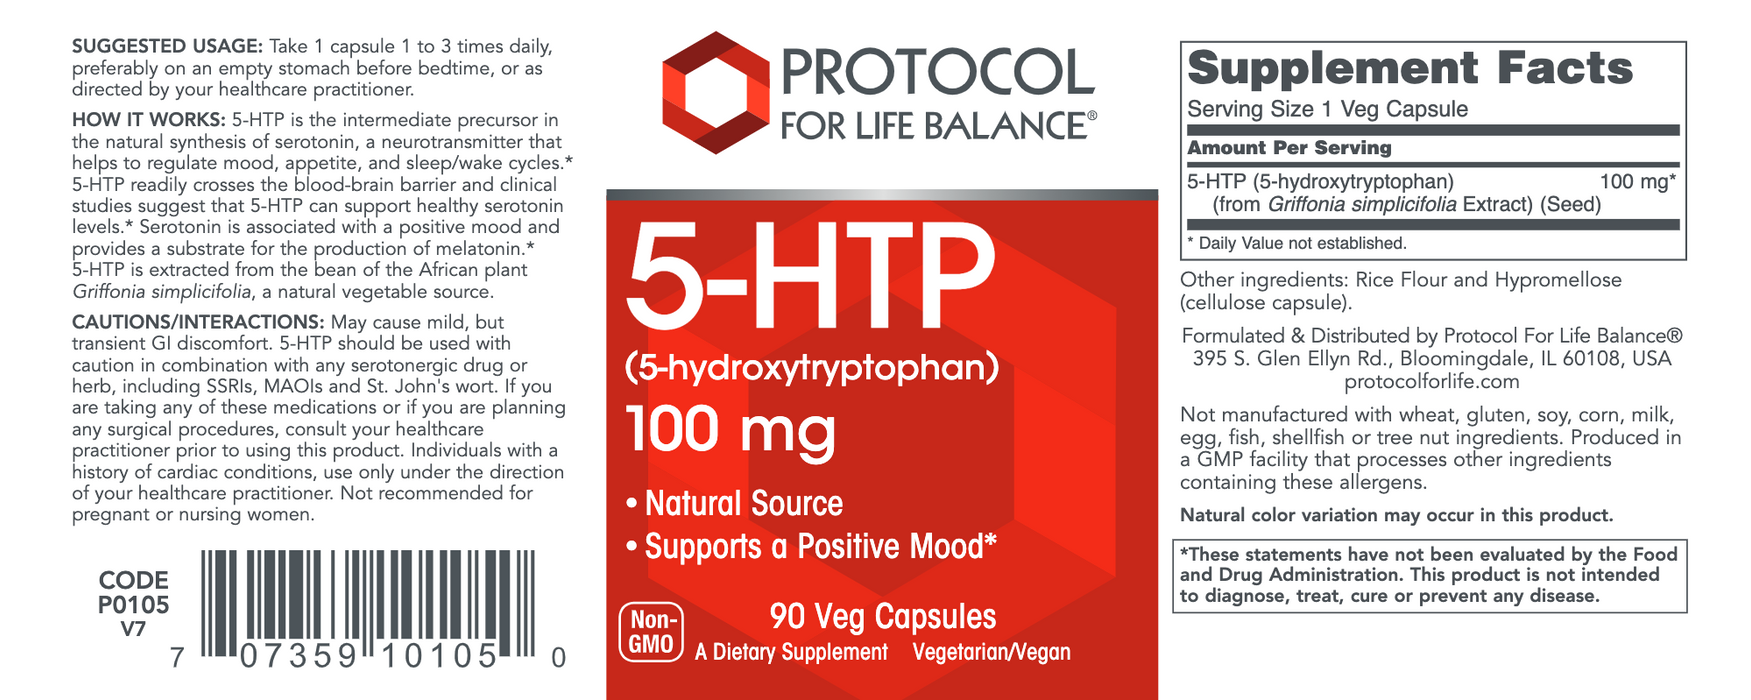 5-HTP-Protocol For Life Balance-Pine Street Clinic